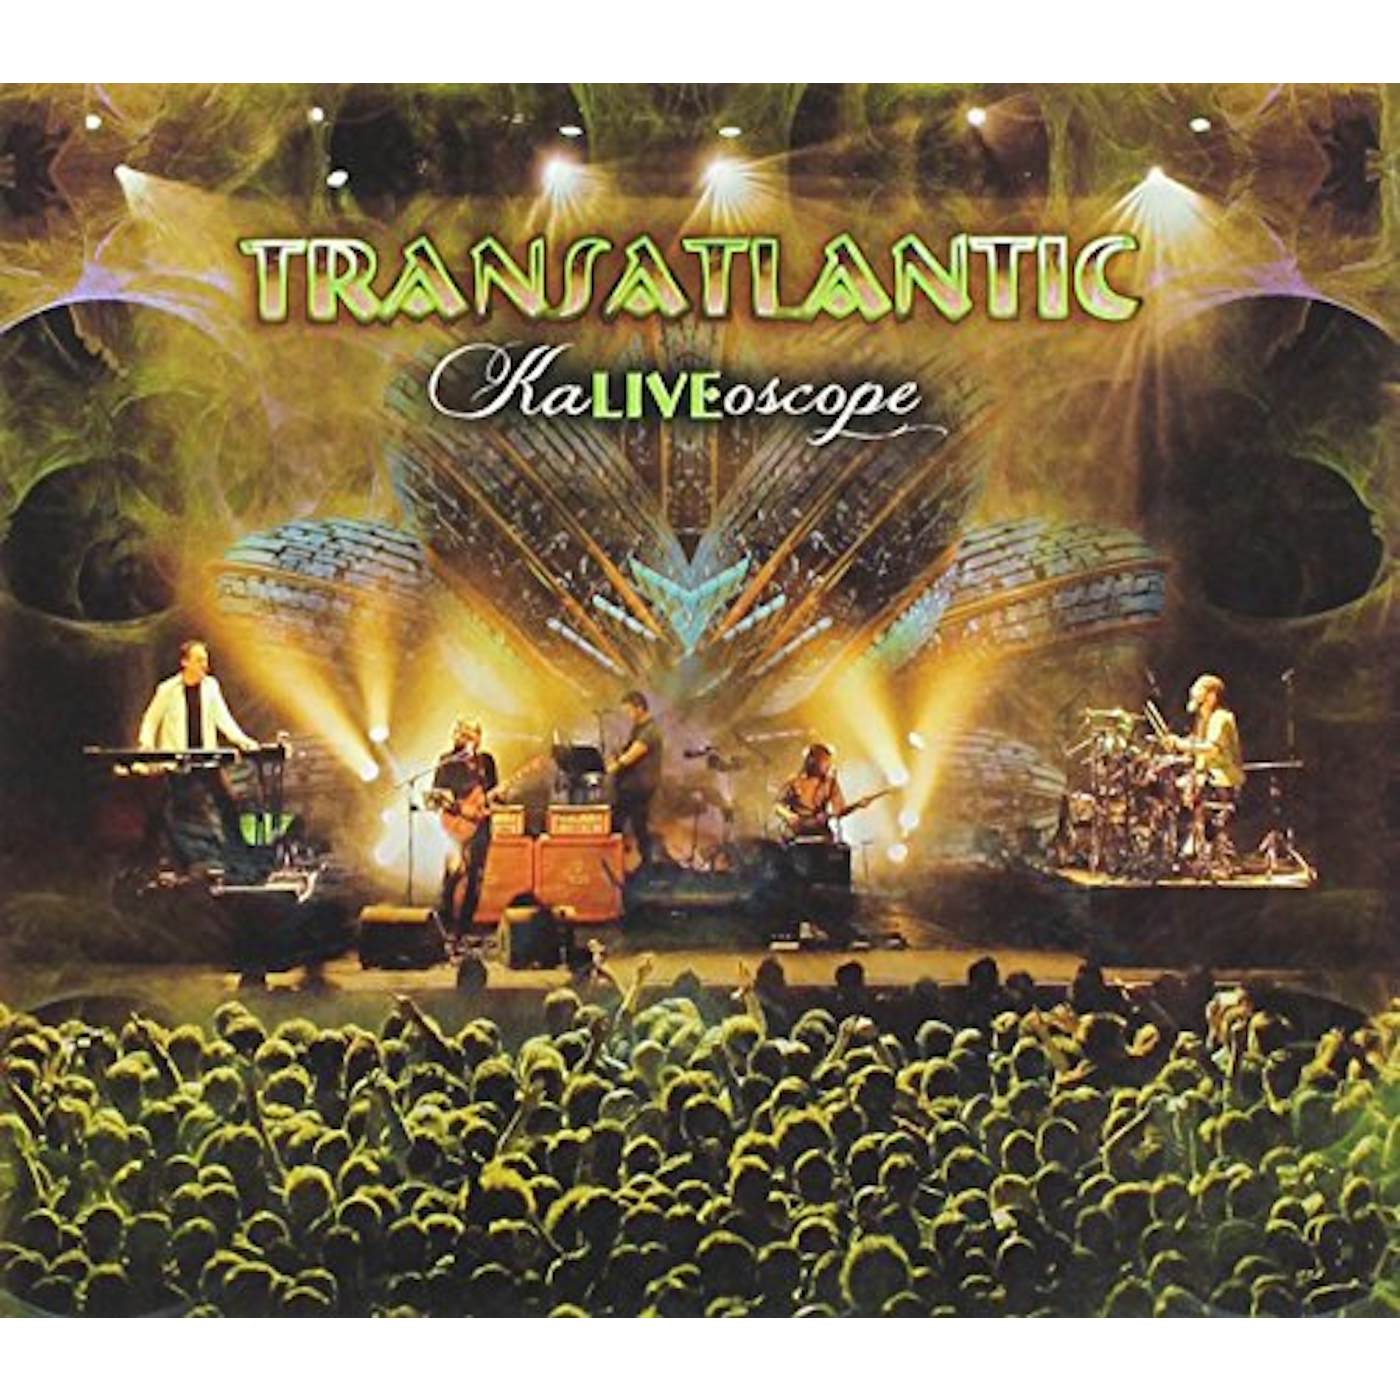 Transatlantic KALIVEOSCOPE CD